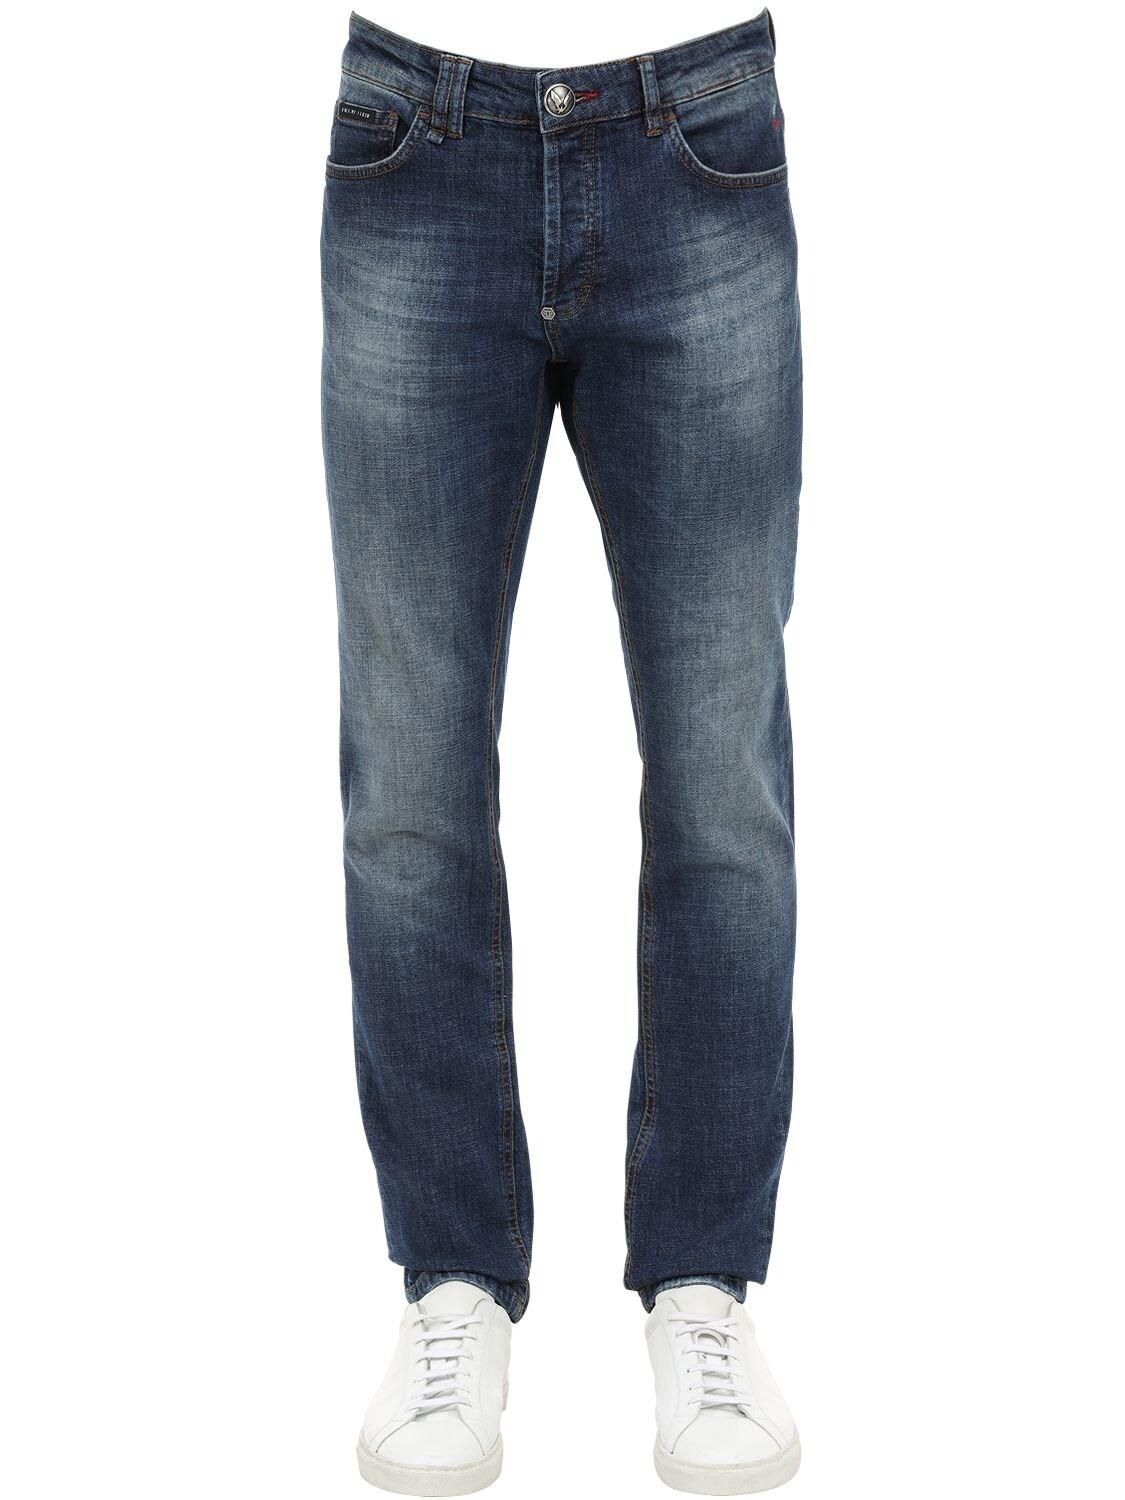 Philipp Plein Straight Washed Cotton Denim Jeans in Blue for Men - Lyst